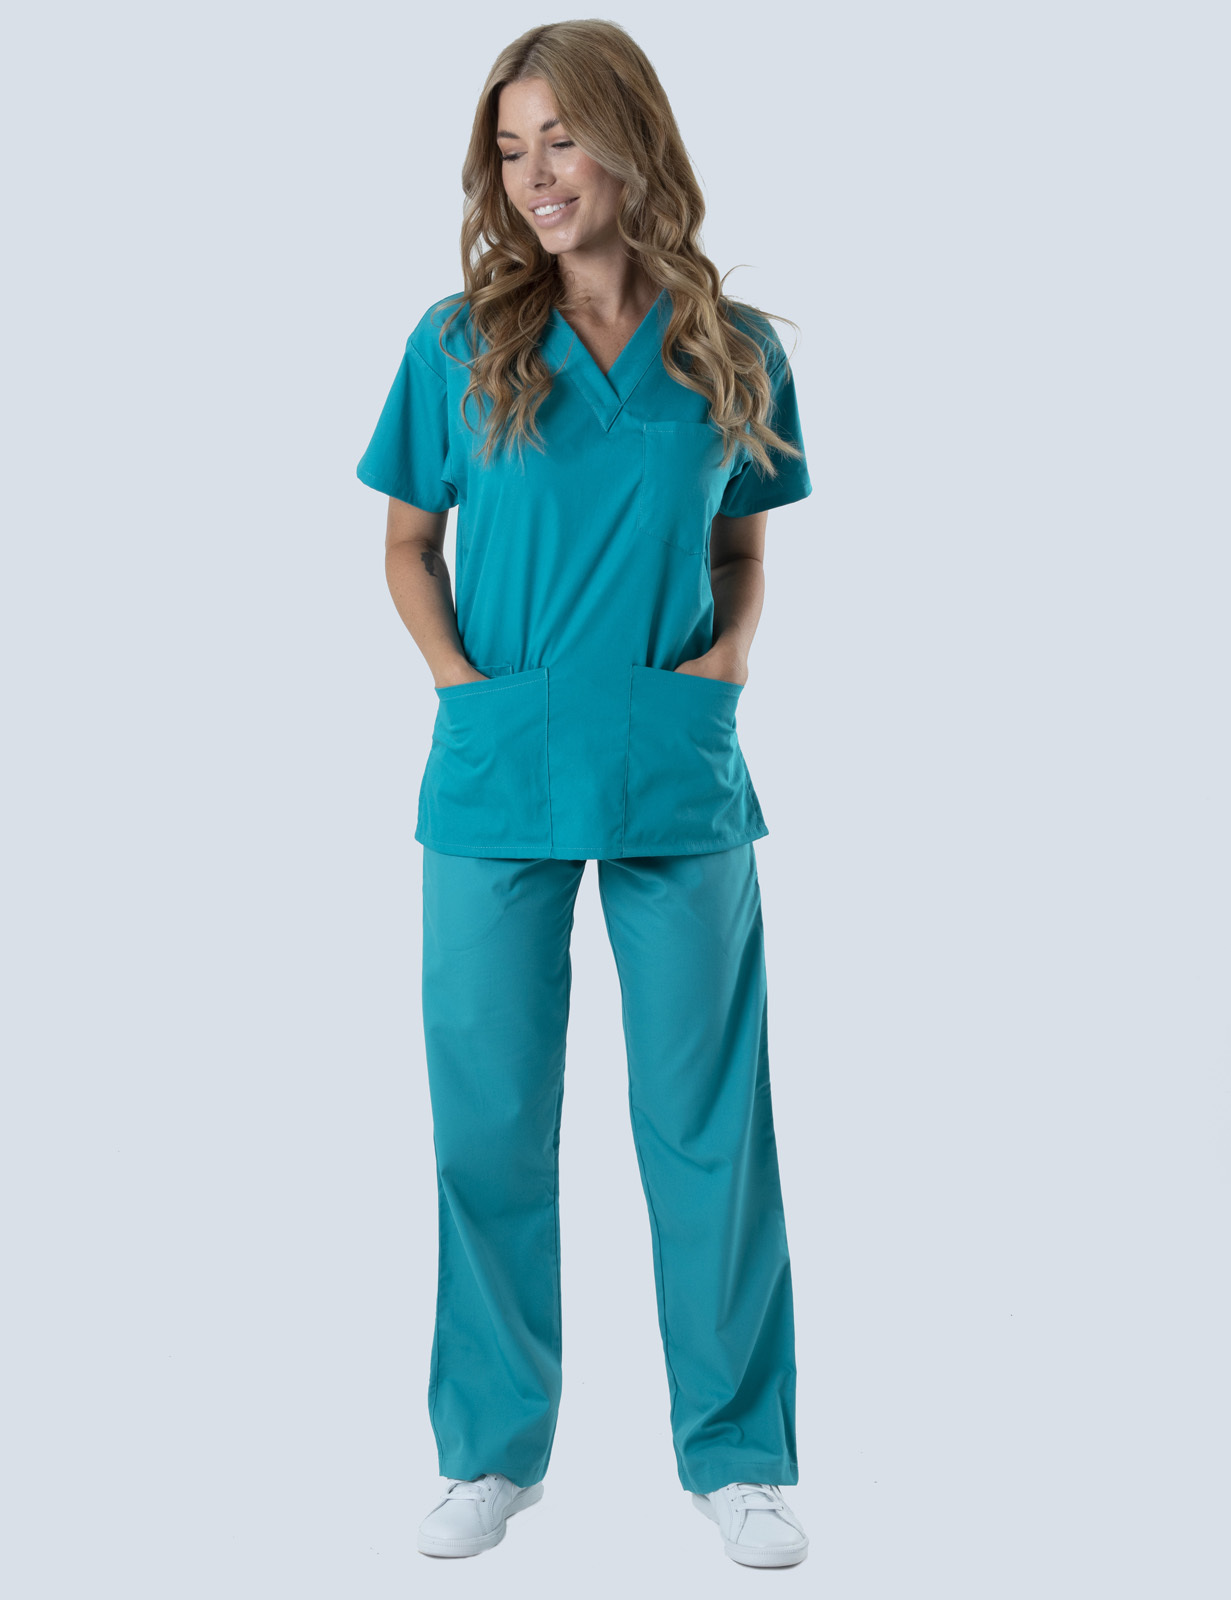 Robina Hospital - ED Nurse (4 Pocket Scrub Top and Cargo Pants in Teal incl Logos)